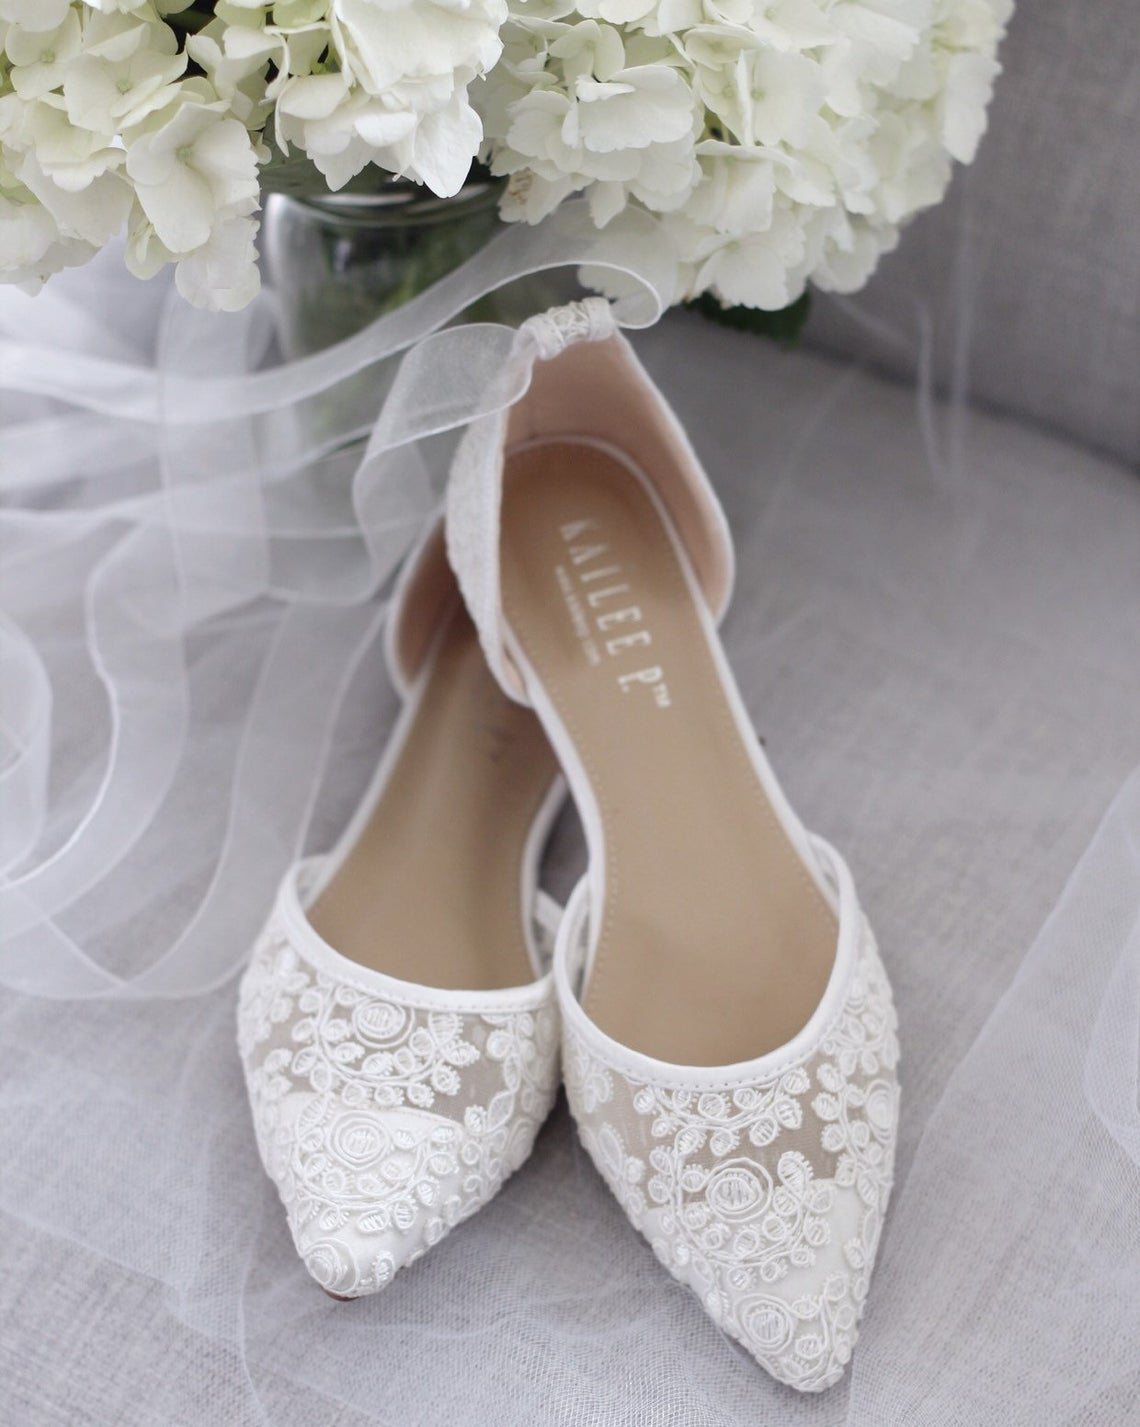 Buy > pretty flat wedding shoes > in stock